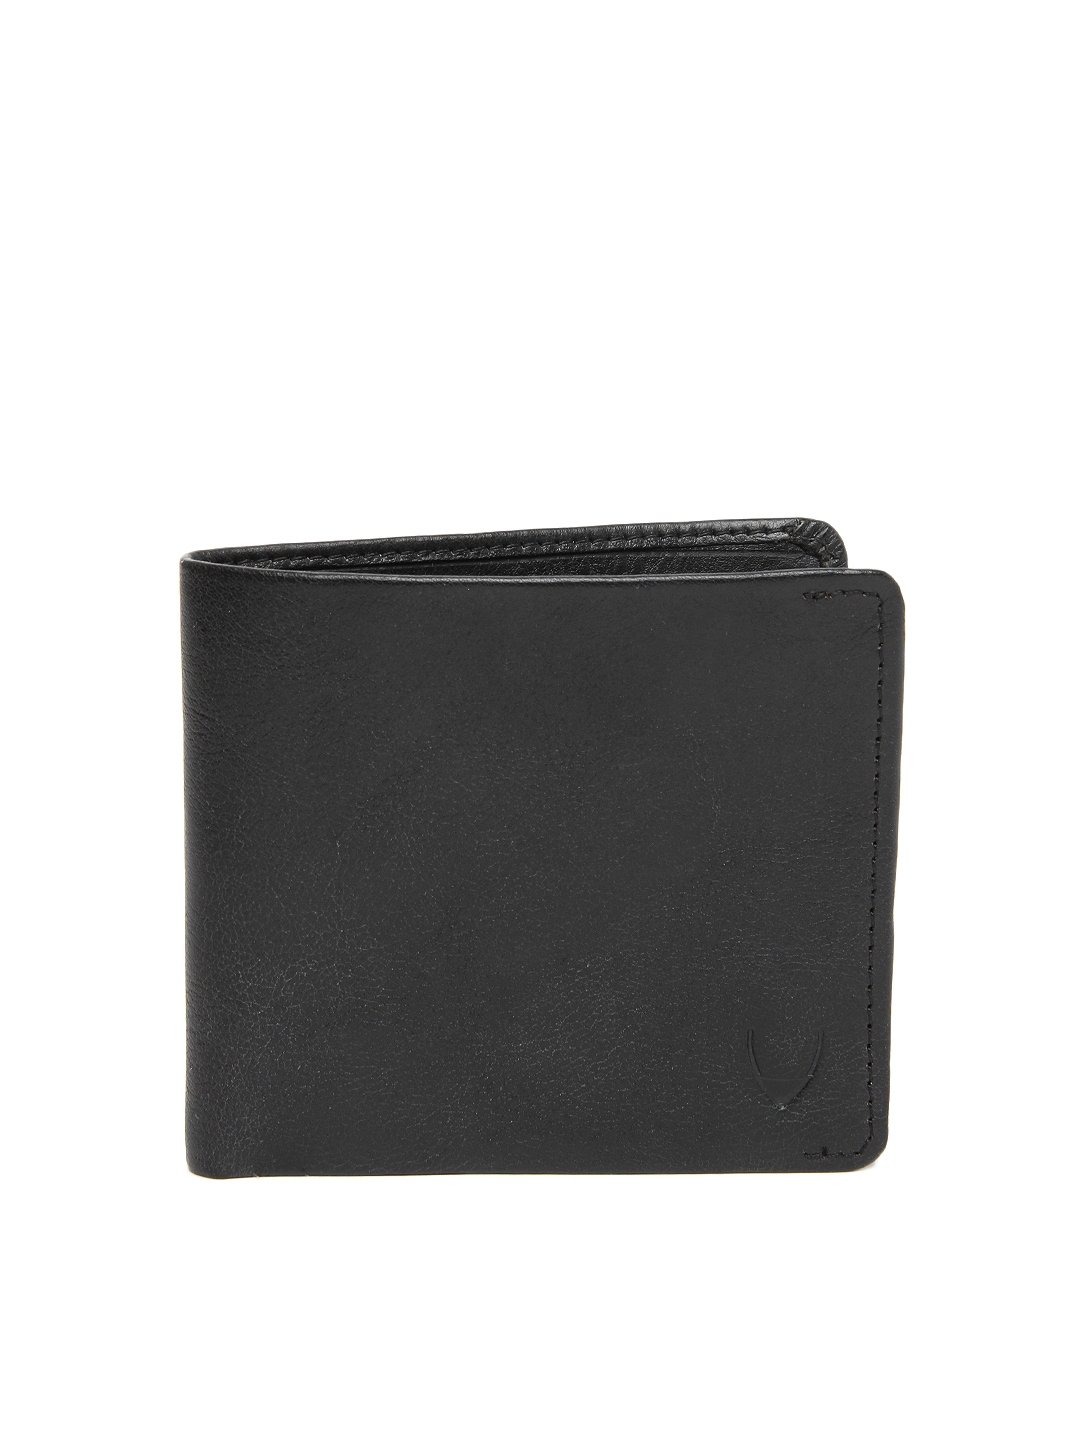 Buy Hidesign Men Black Leather Wallet - Wallets for Men 358602 | Myntra